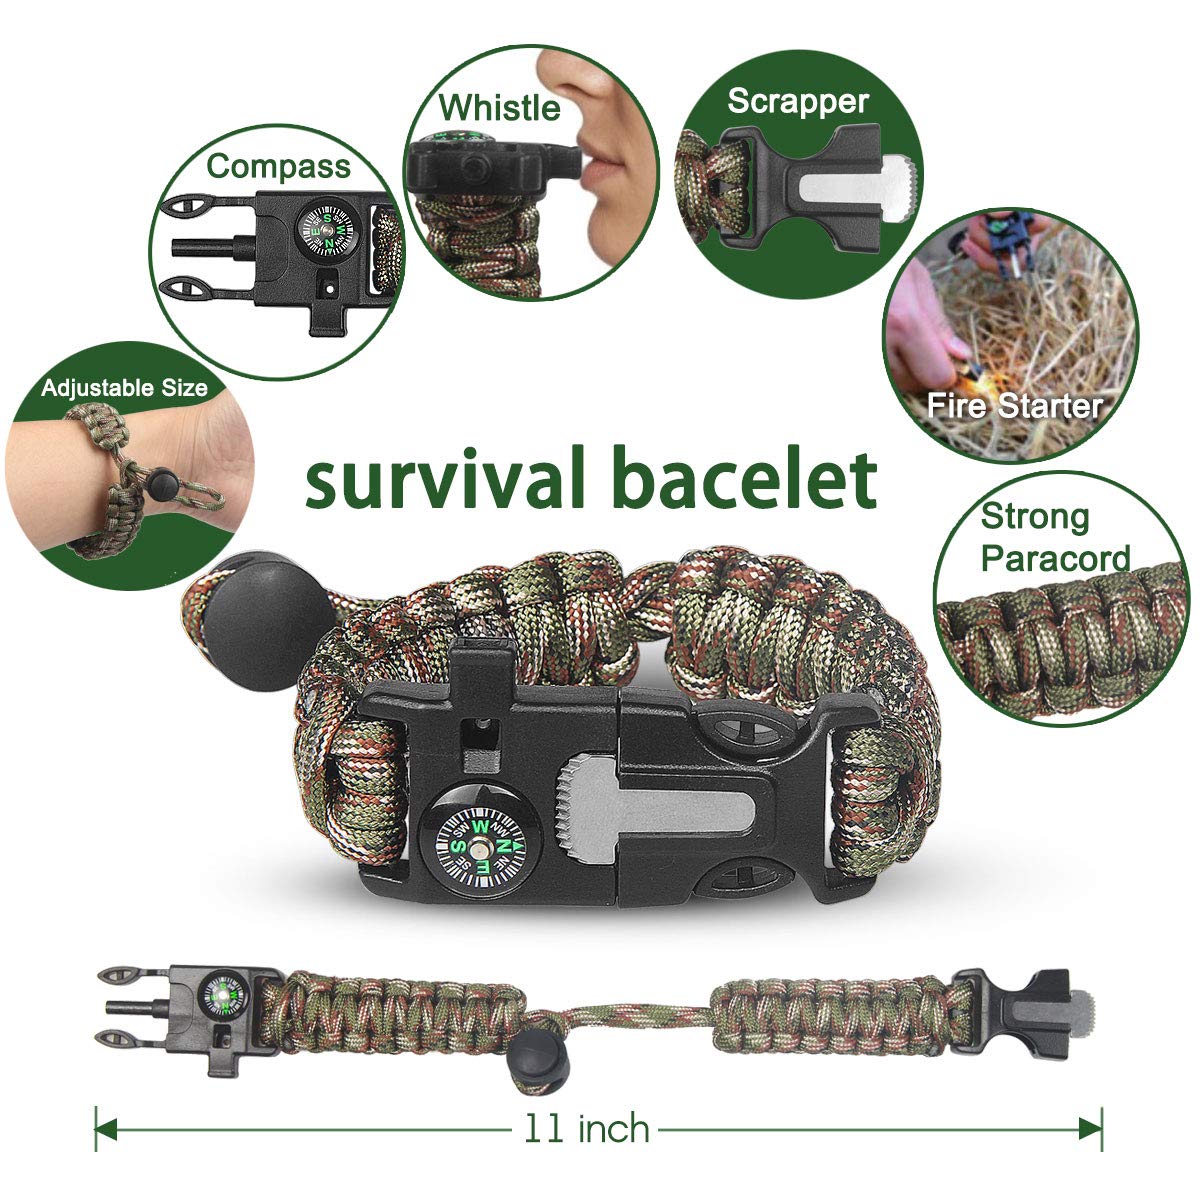 VF DONGFANG Survival kit,12in1 Survival Gear Gift for Him Men